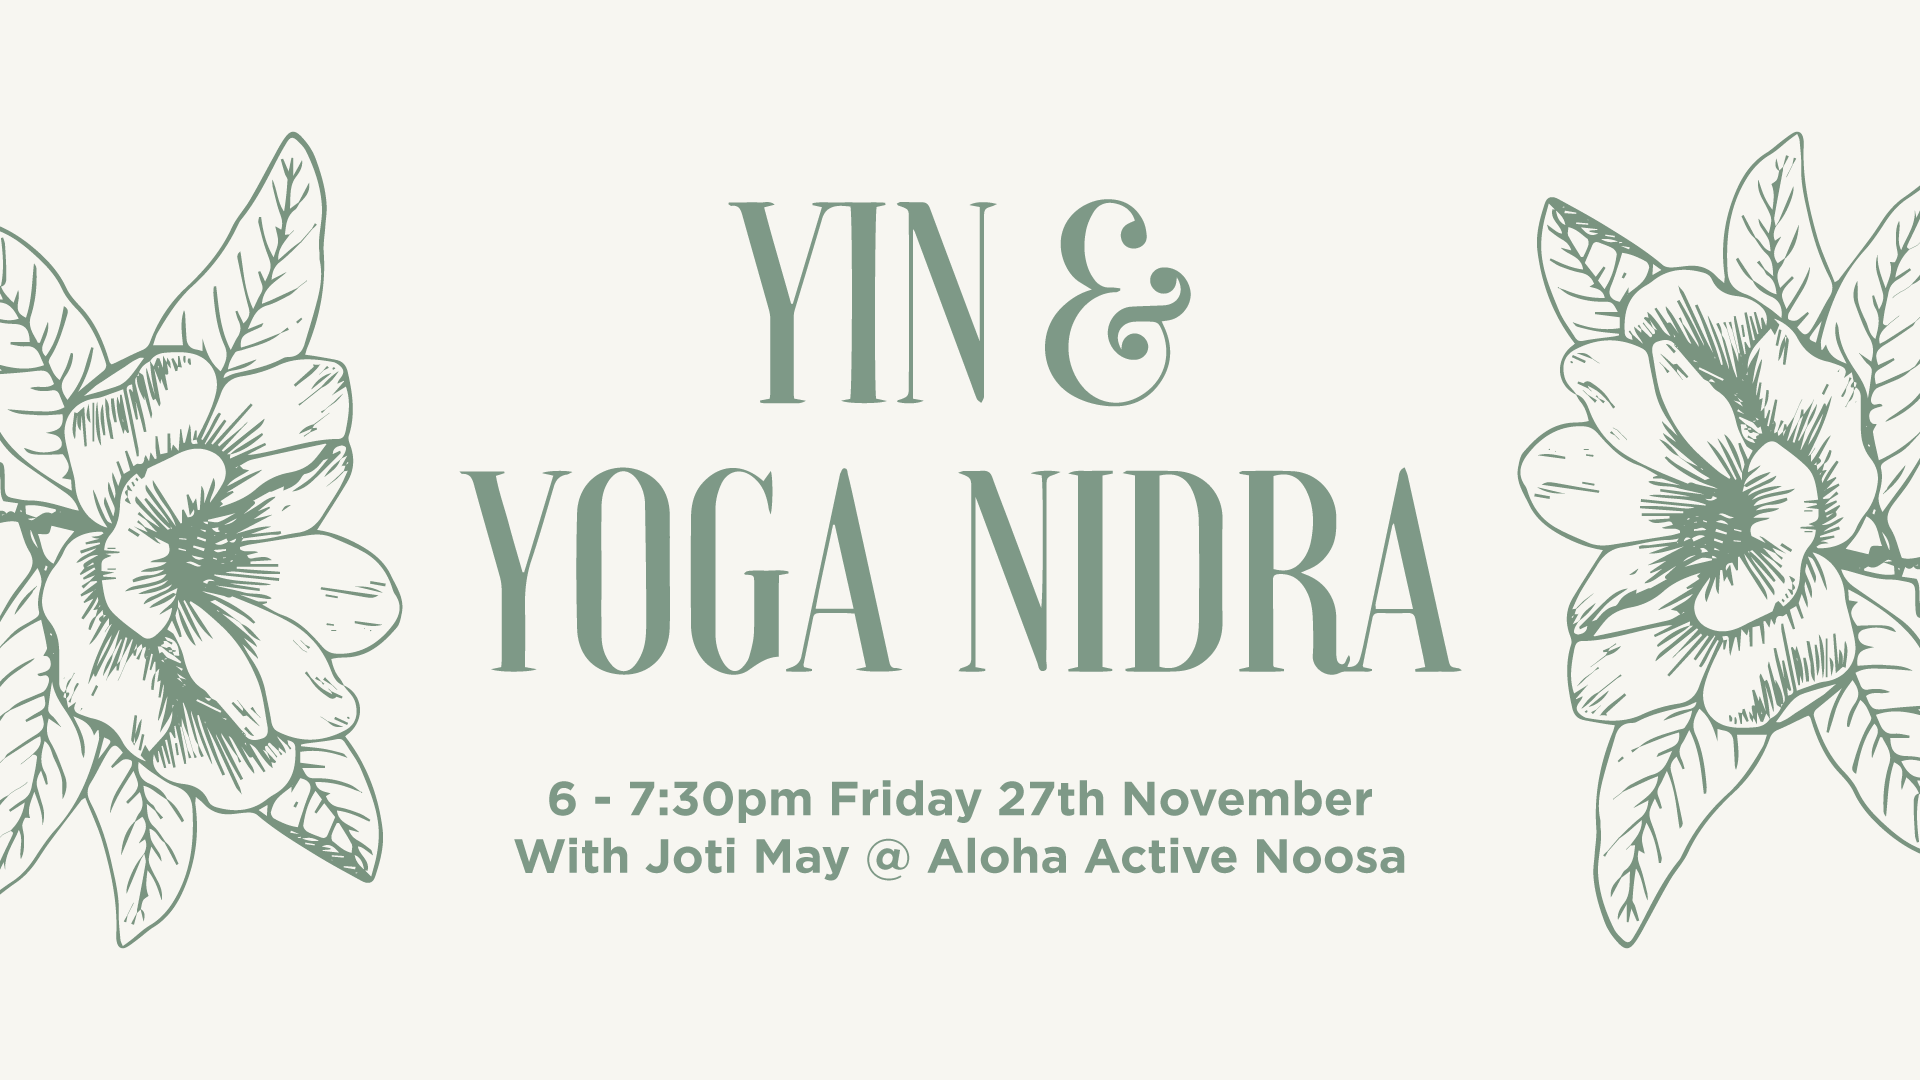 Yin & Yoga Nidra with Joti May